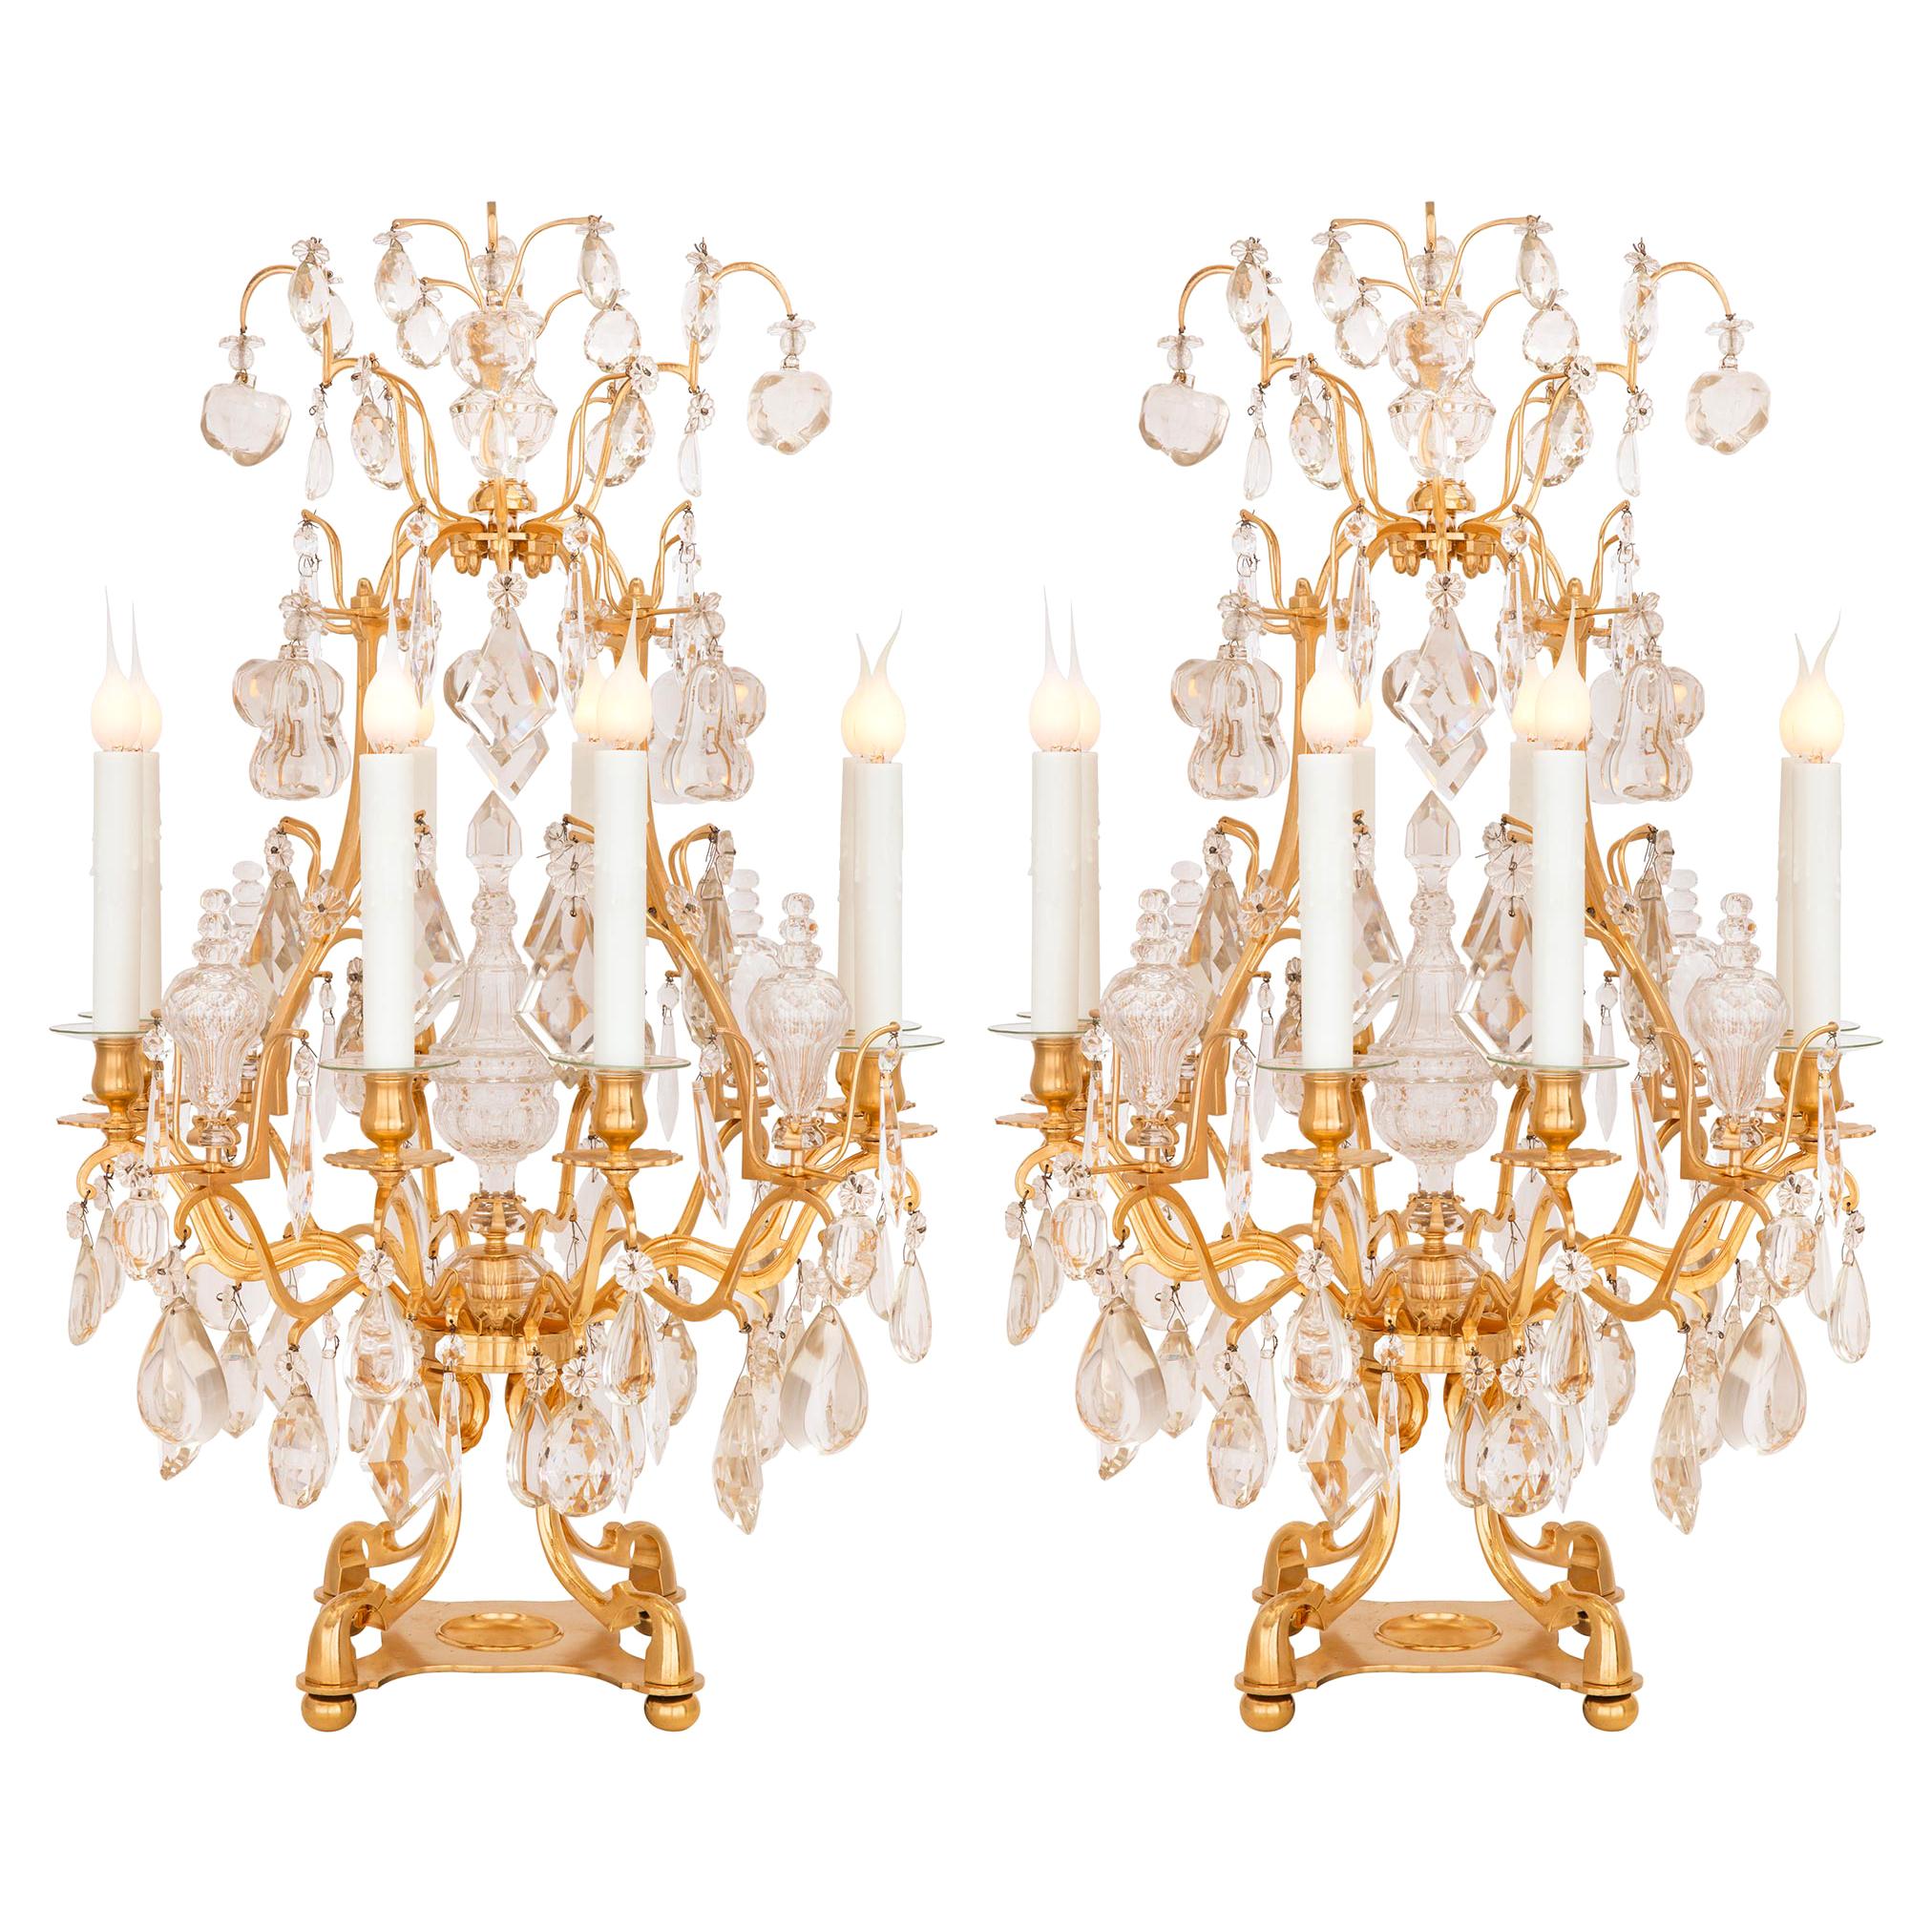 Pair of French 19th Century Louis XVI St. Belle Époque Period Girandole Lamps For Sale